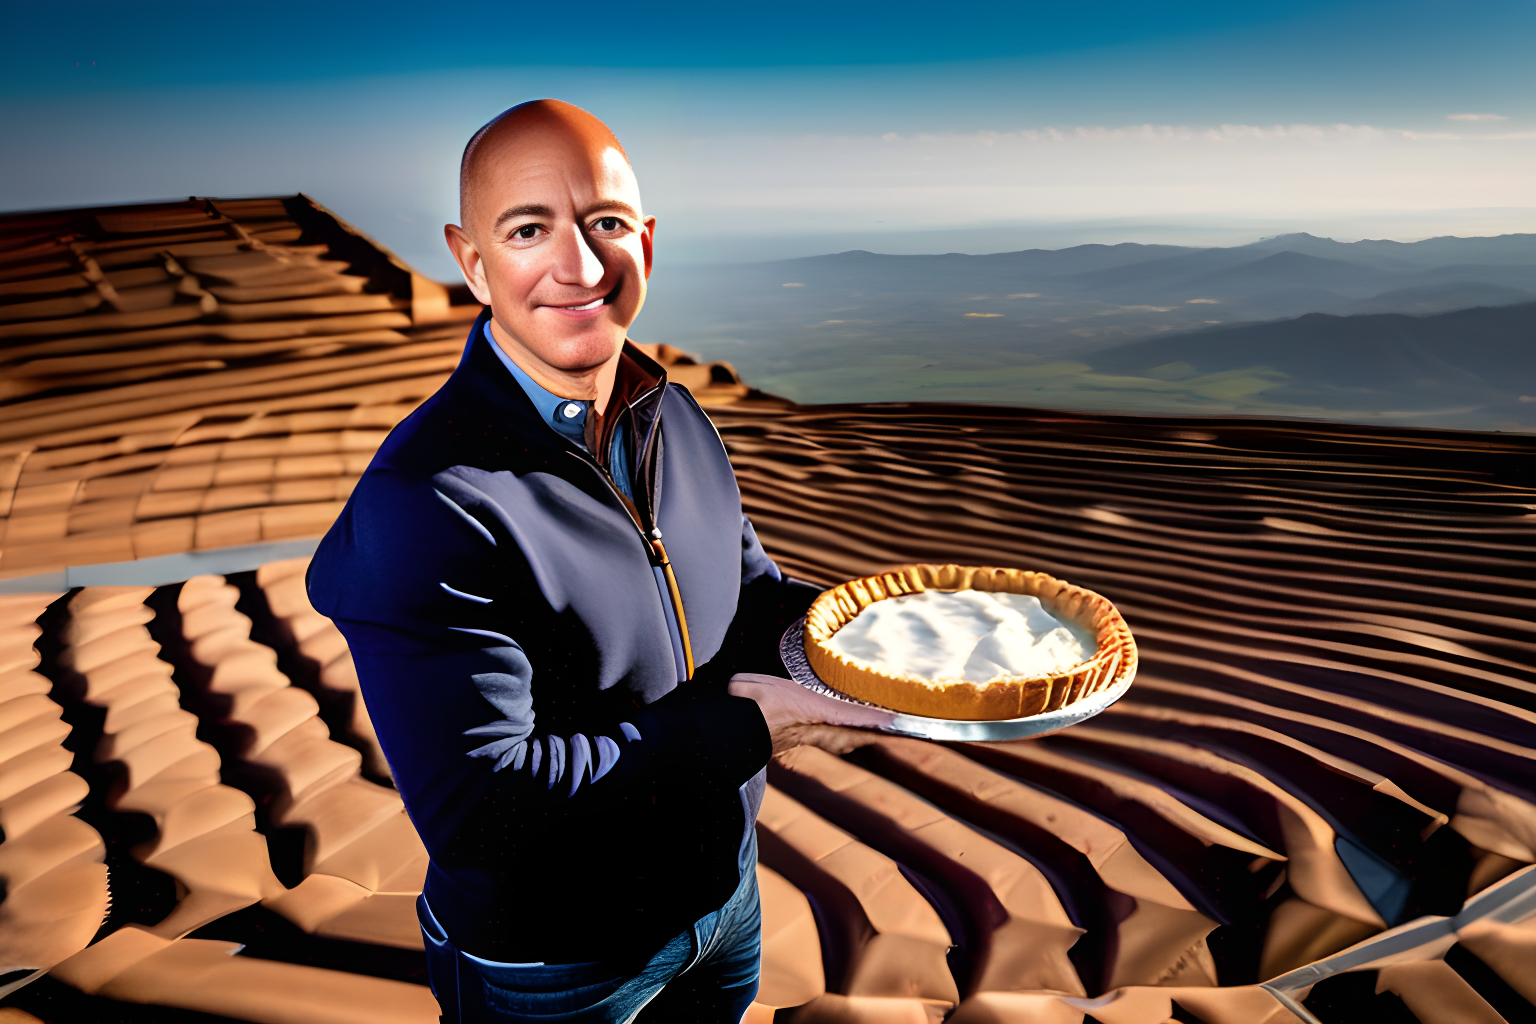 Breathtaking photograph of jeff bezos holding a pie.